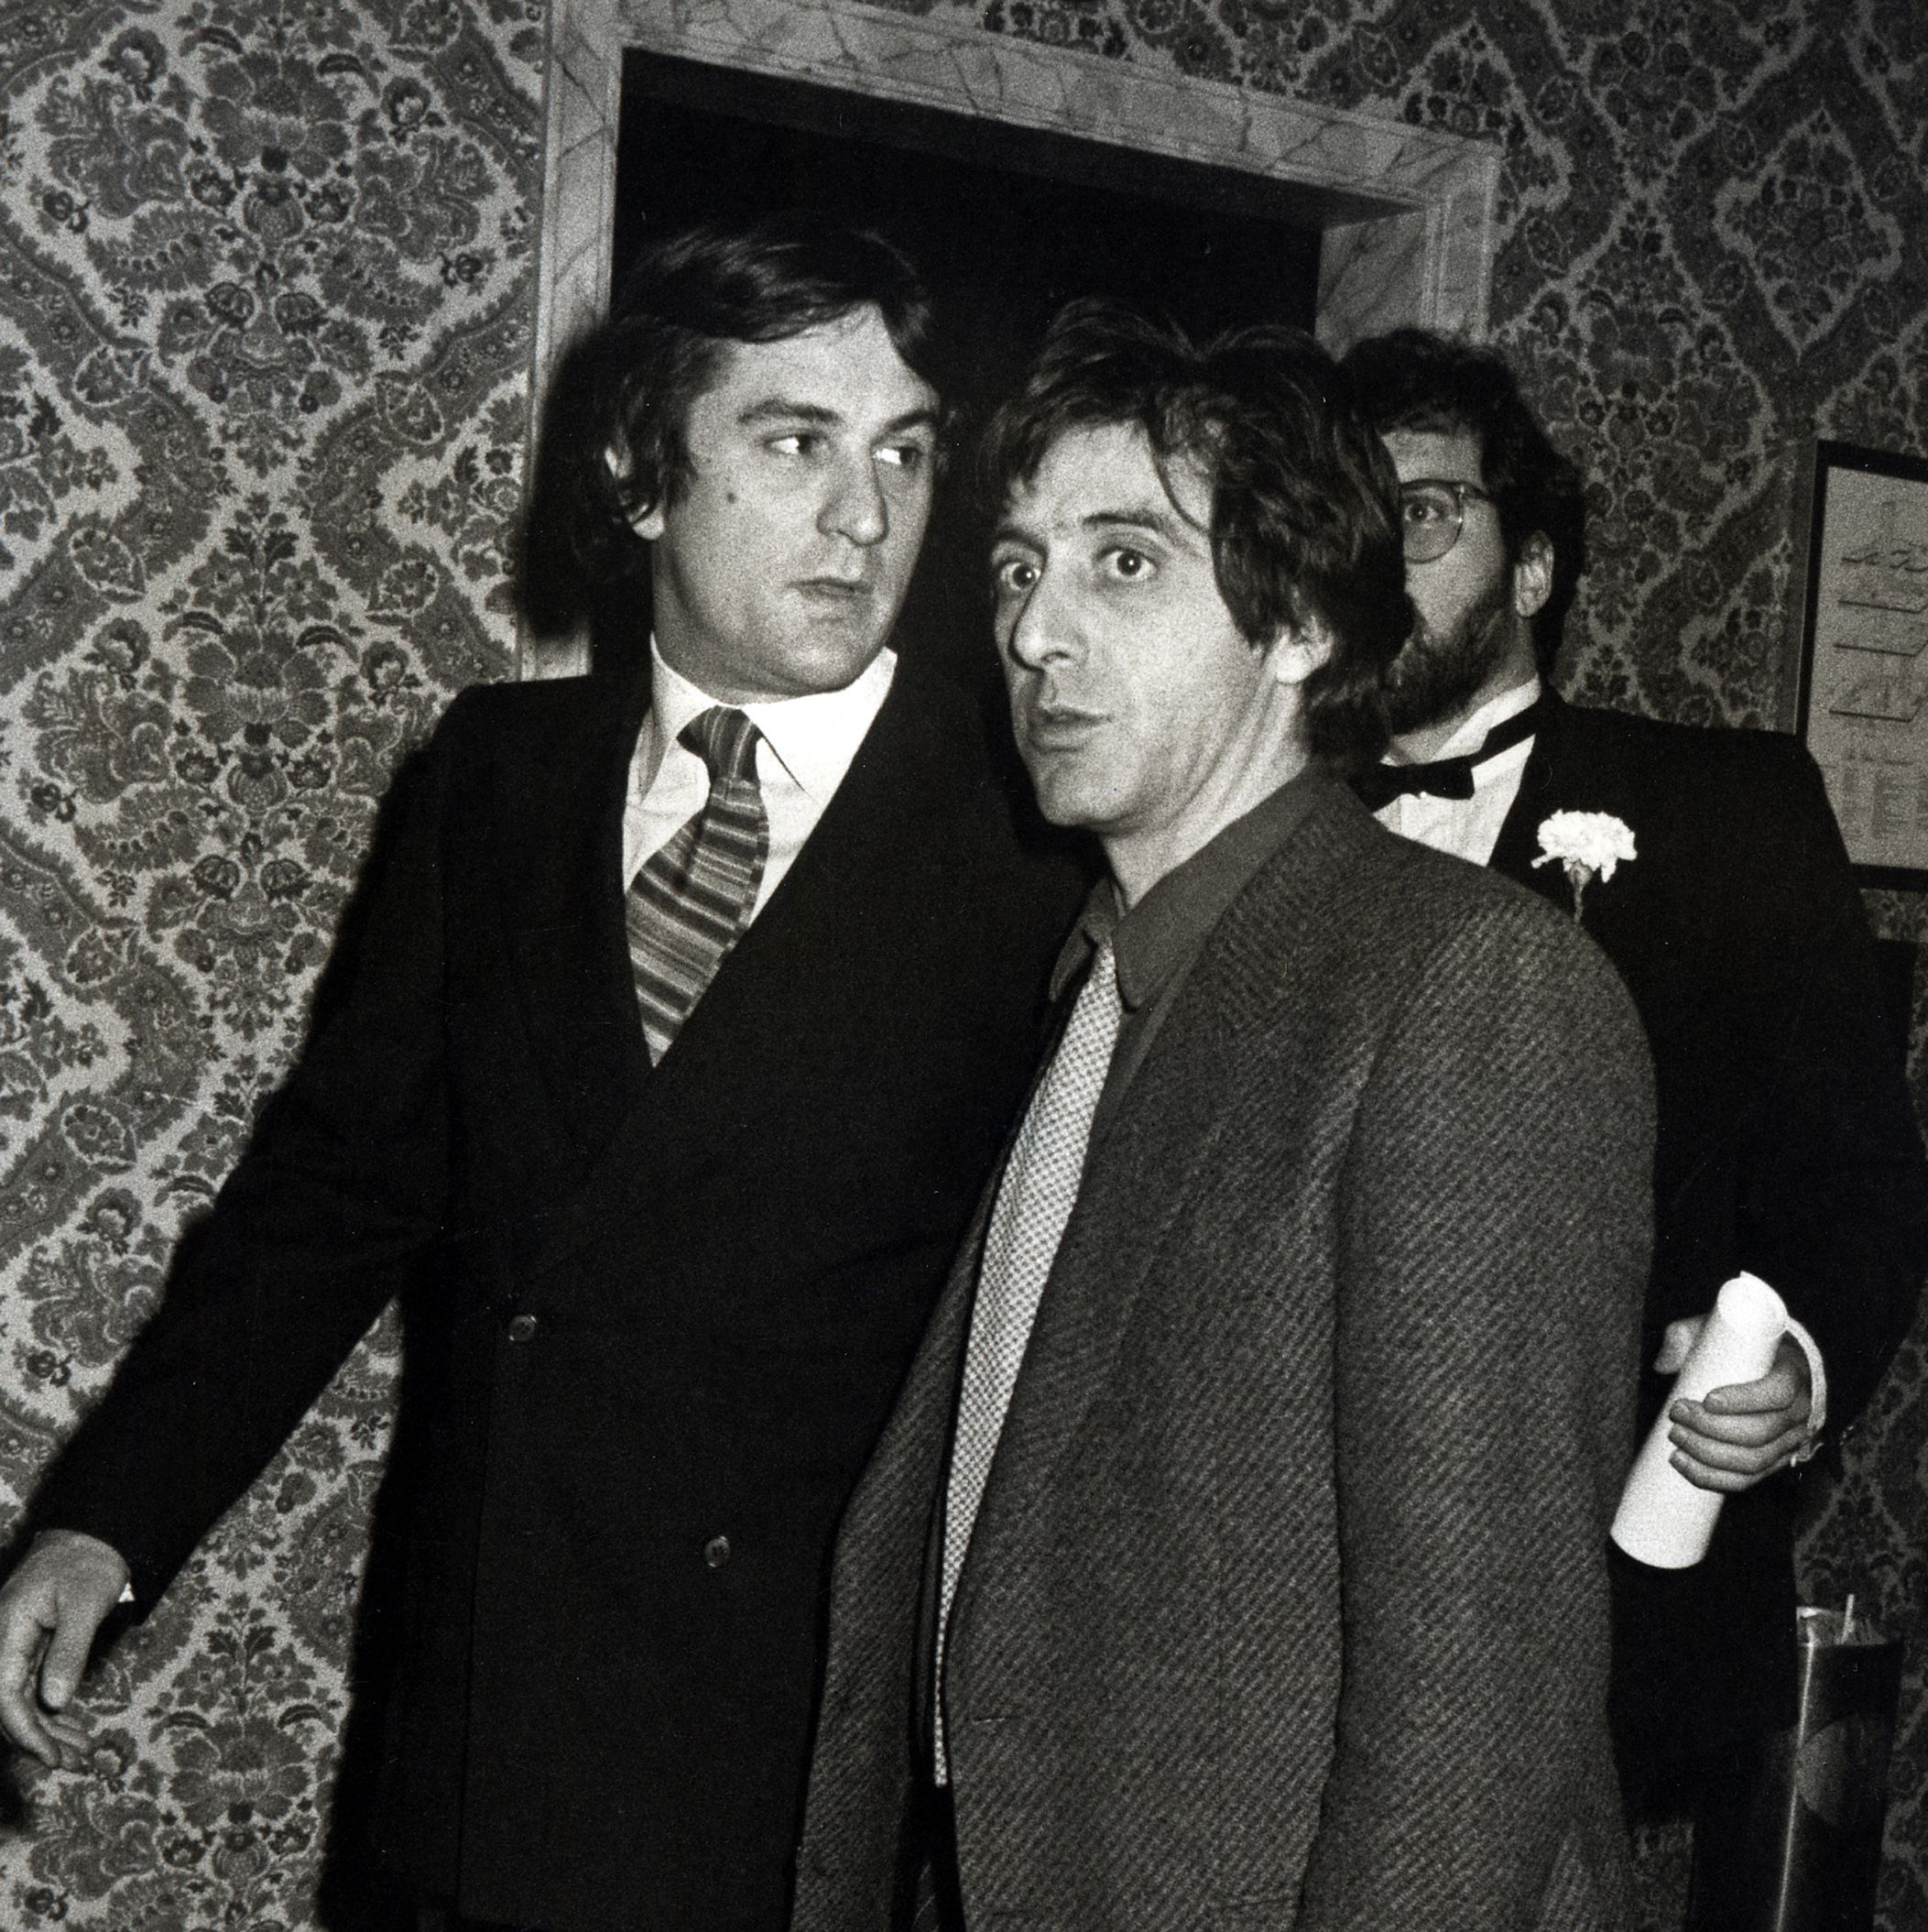 The Hornt-Up Robert De Niro and Al Pacino Debate Is Missing the Point